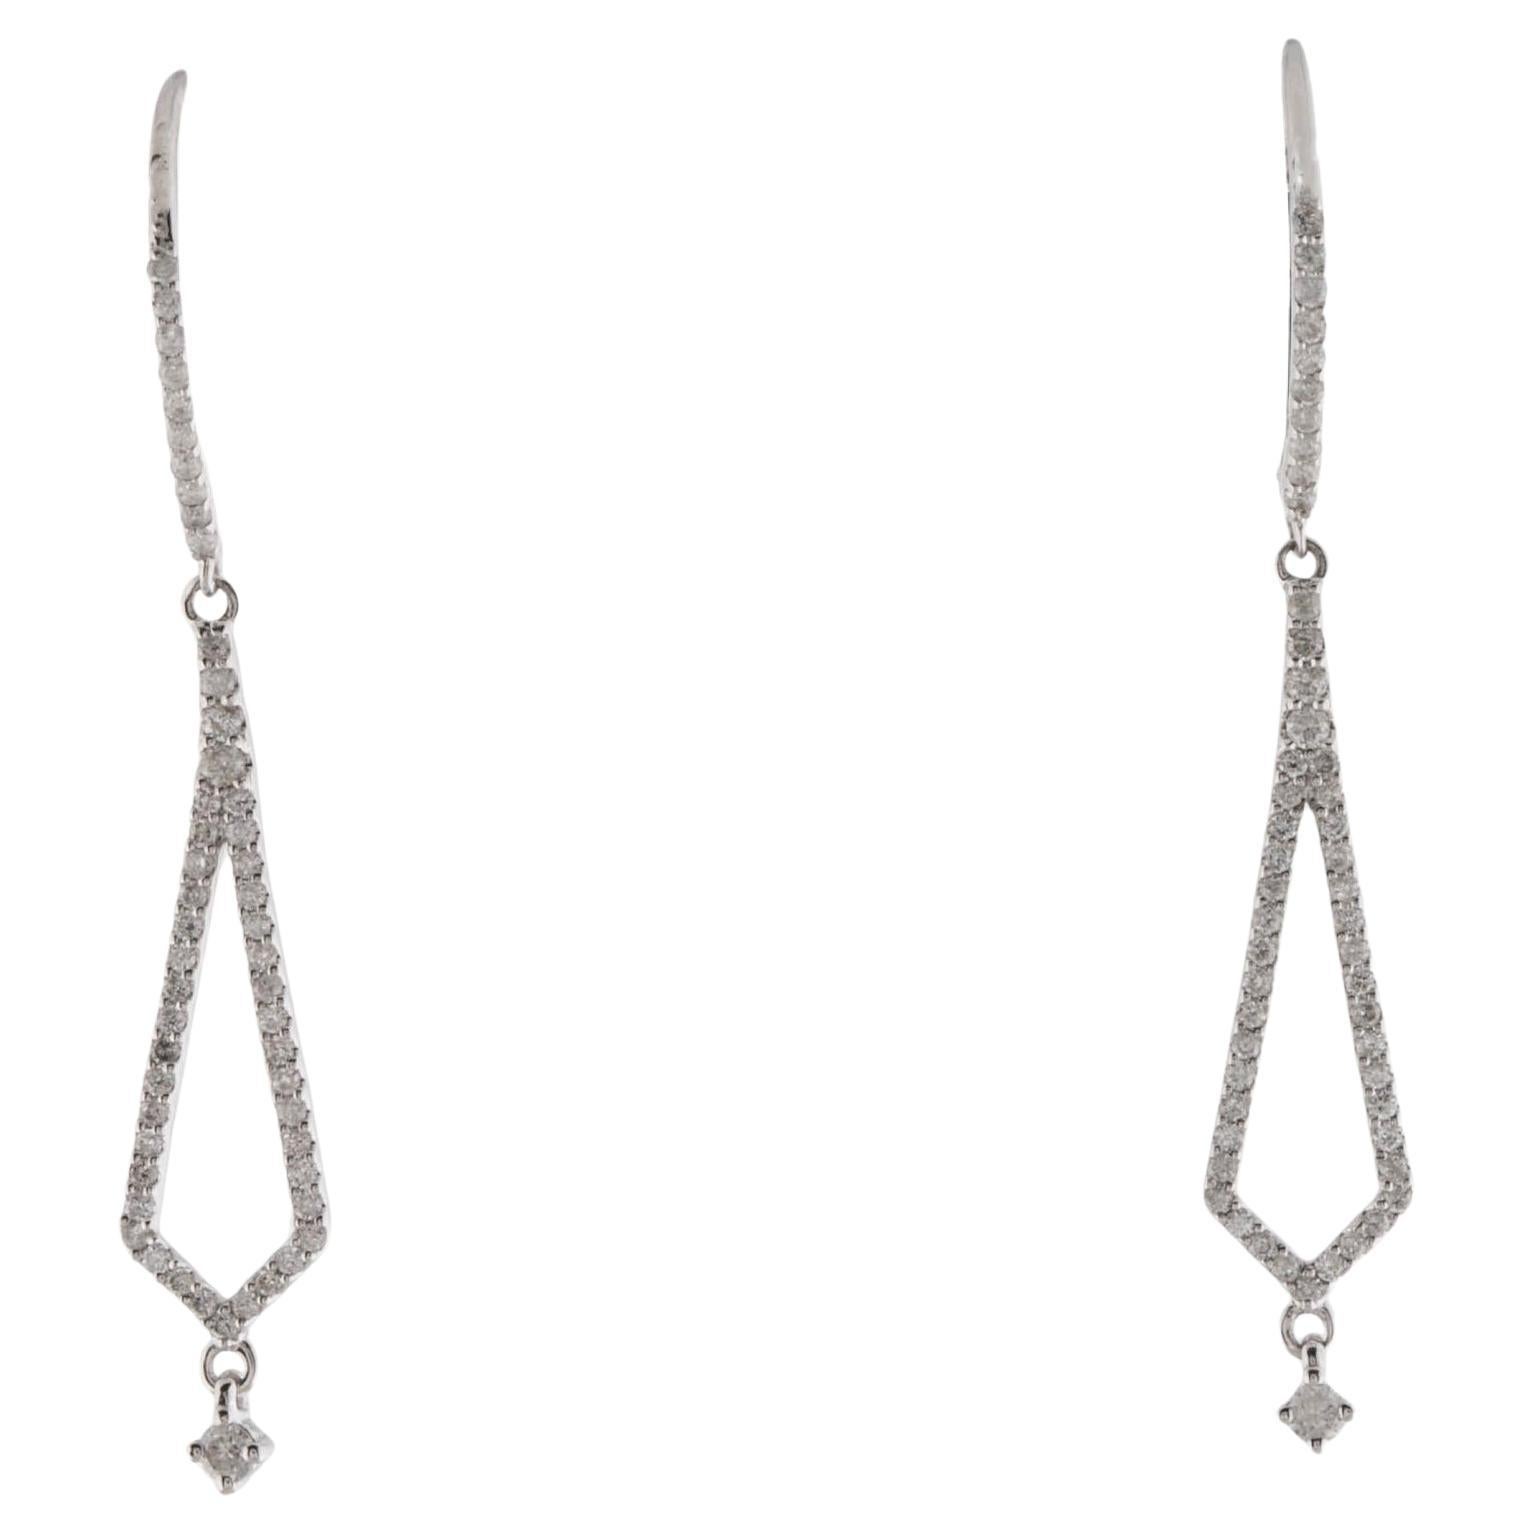 14K Diamond Drop Earrings - Exquisite Sparkle, Timeless Elegance, Elegant Design